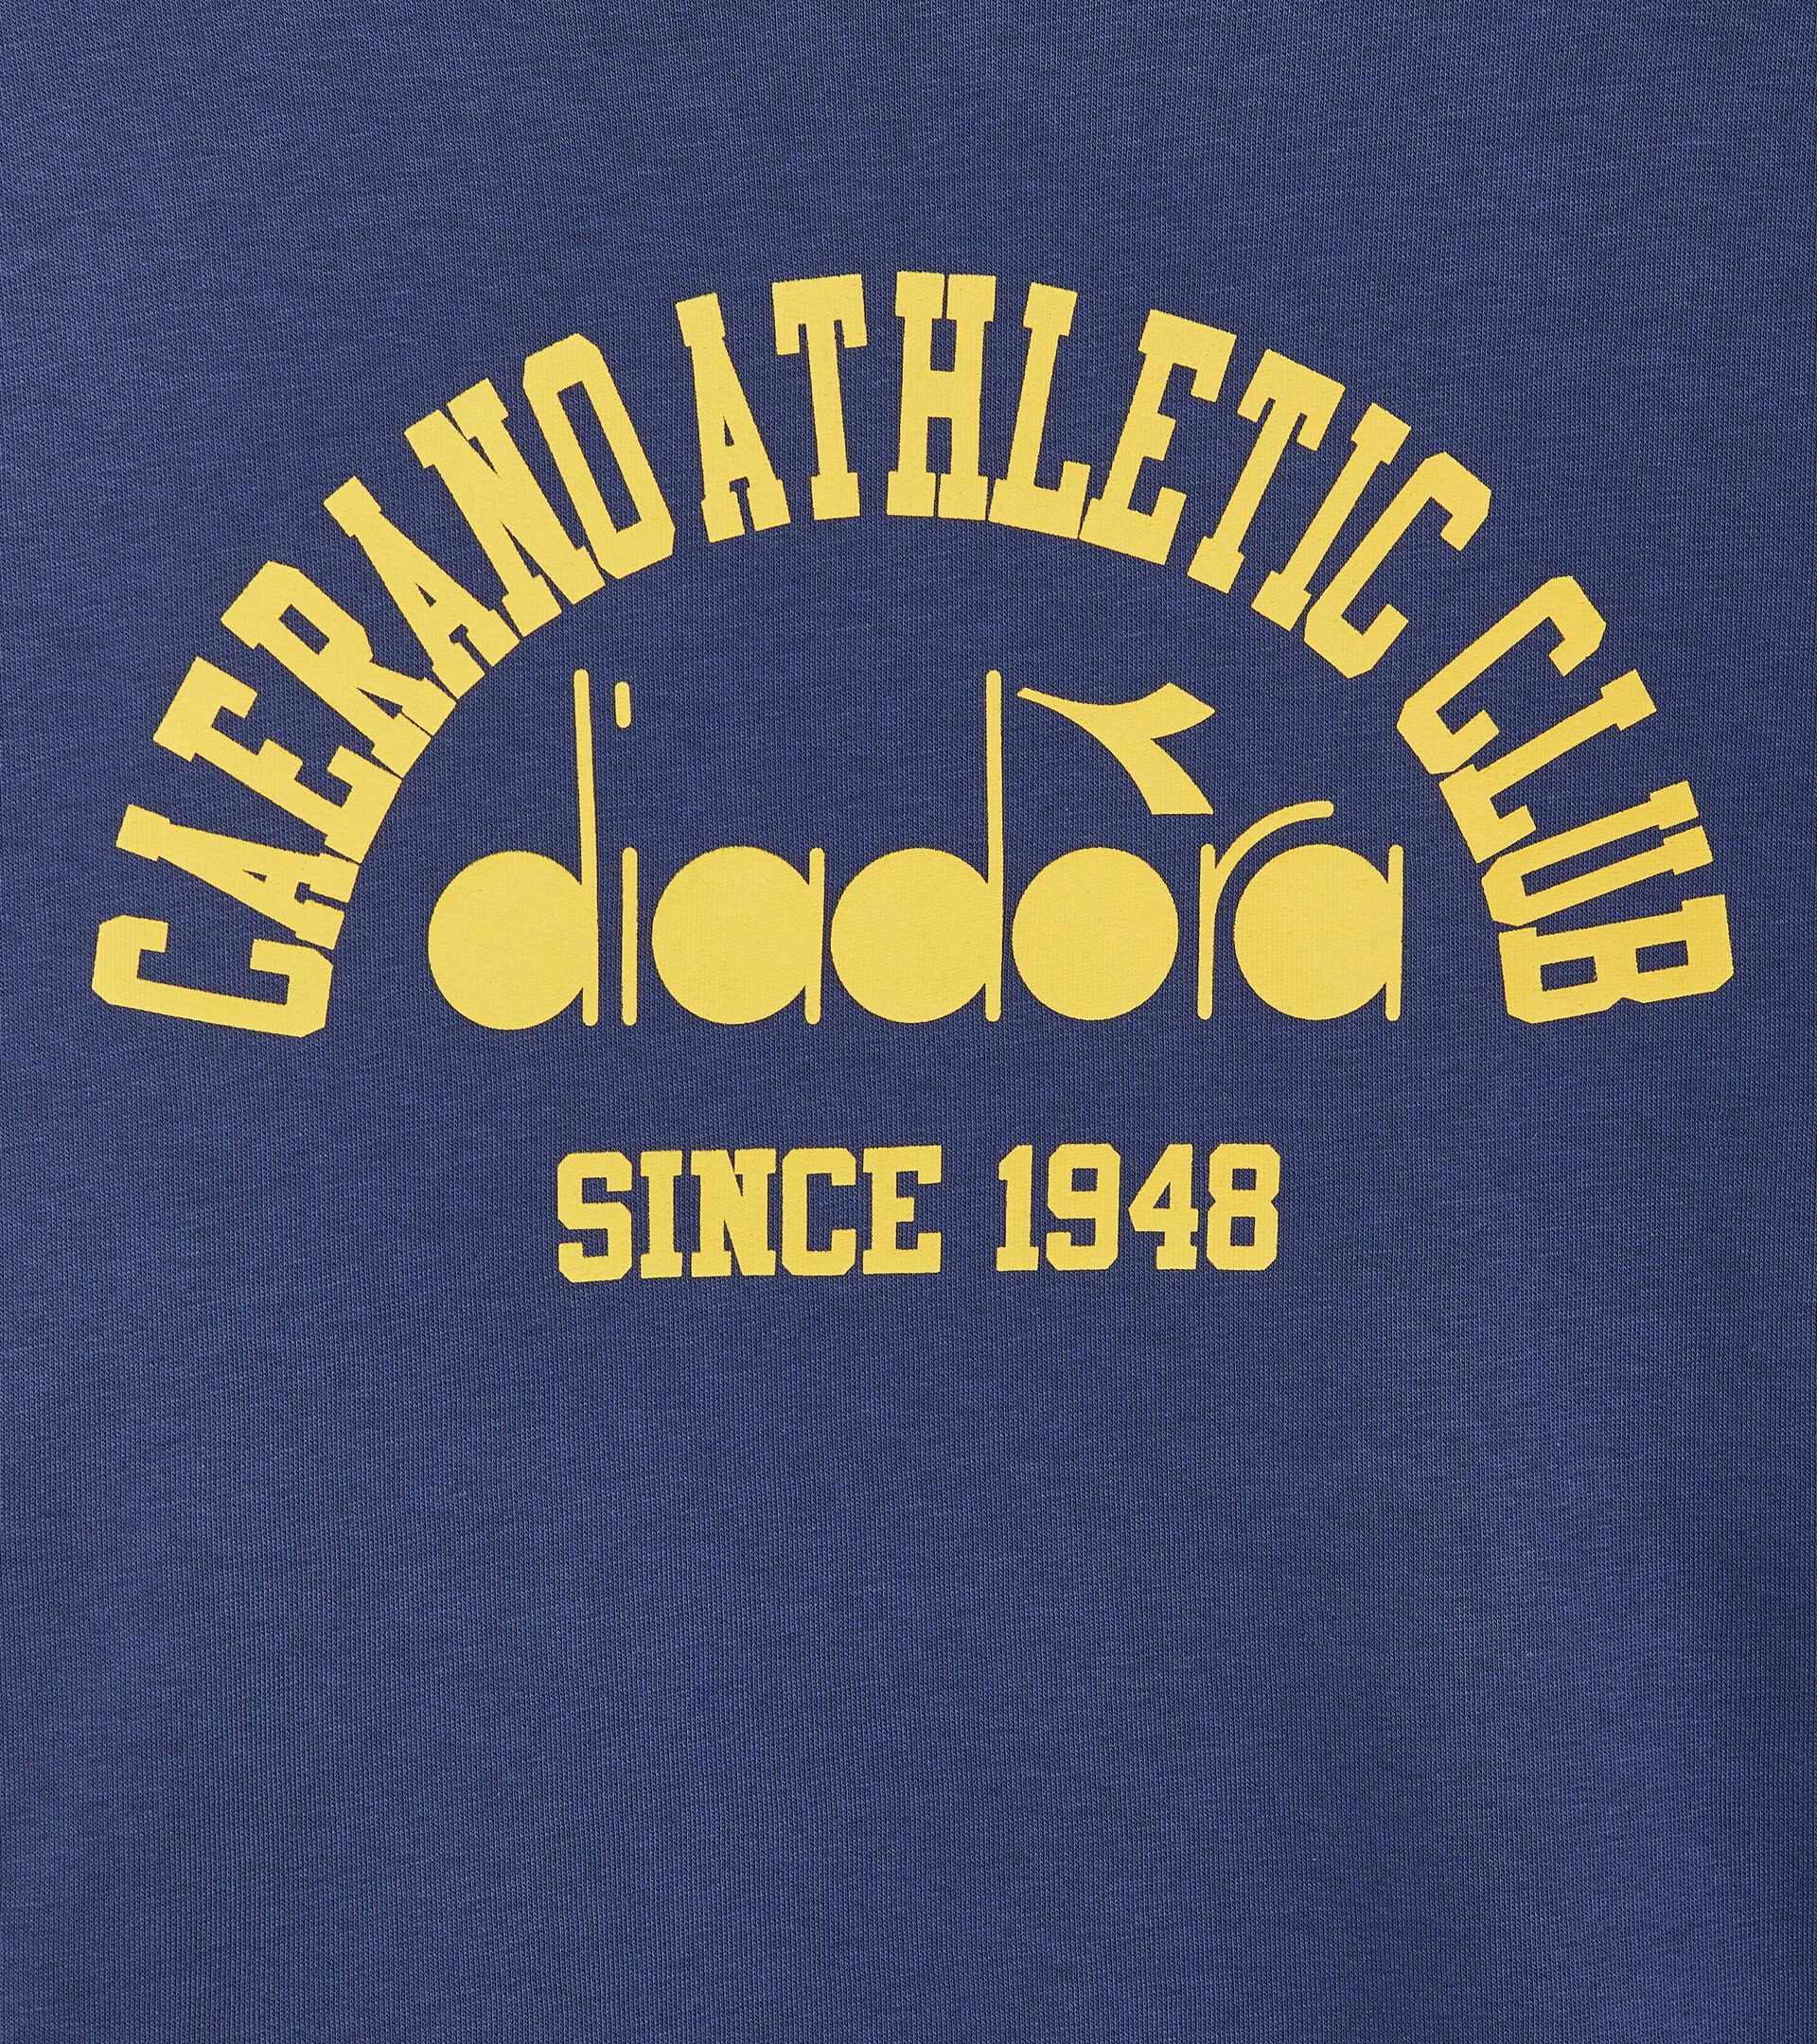 Crewneck sweatshirt - Gender Neutral SWEATSHIRT CREW 1948 ATHL. CLUB OCEANA - Diadora